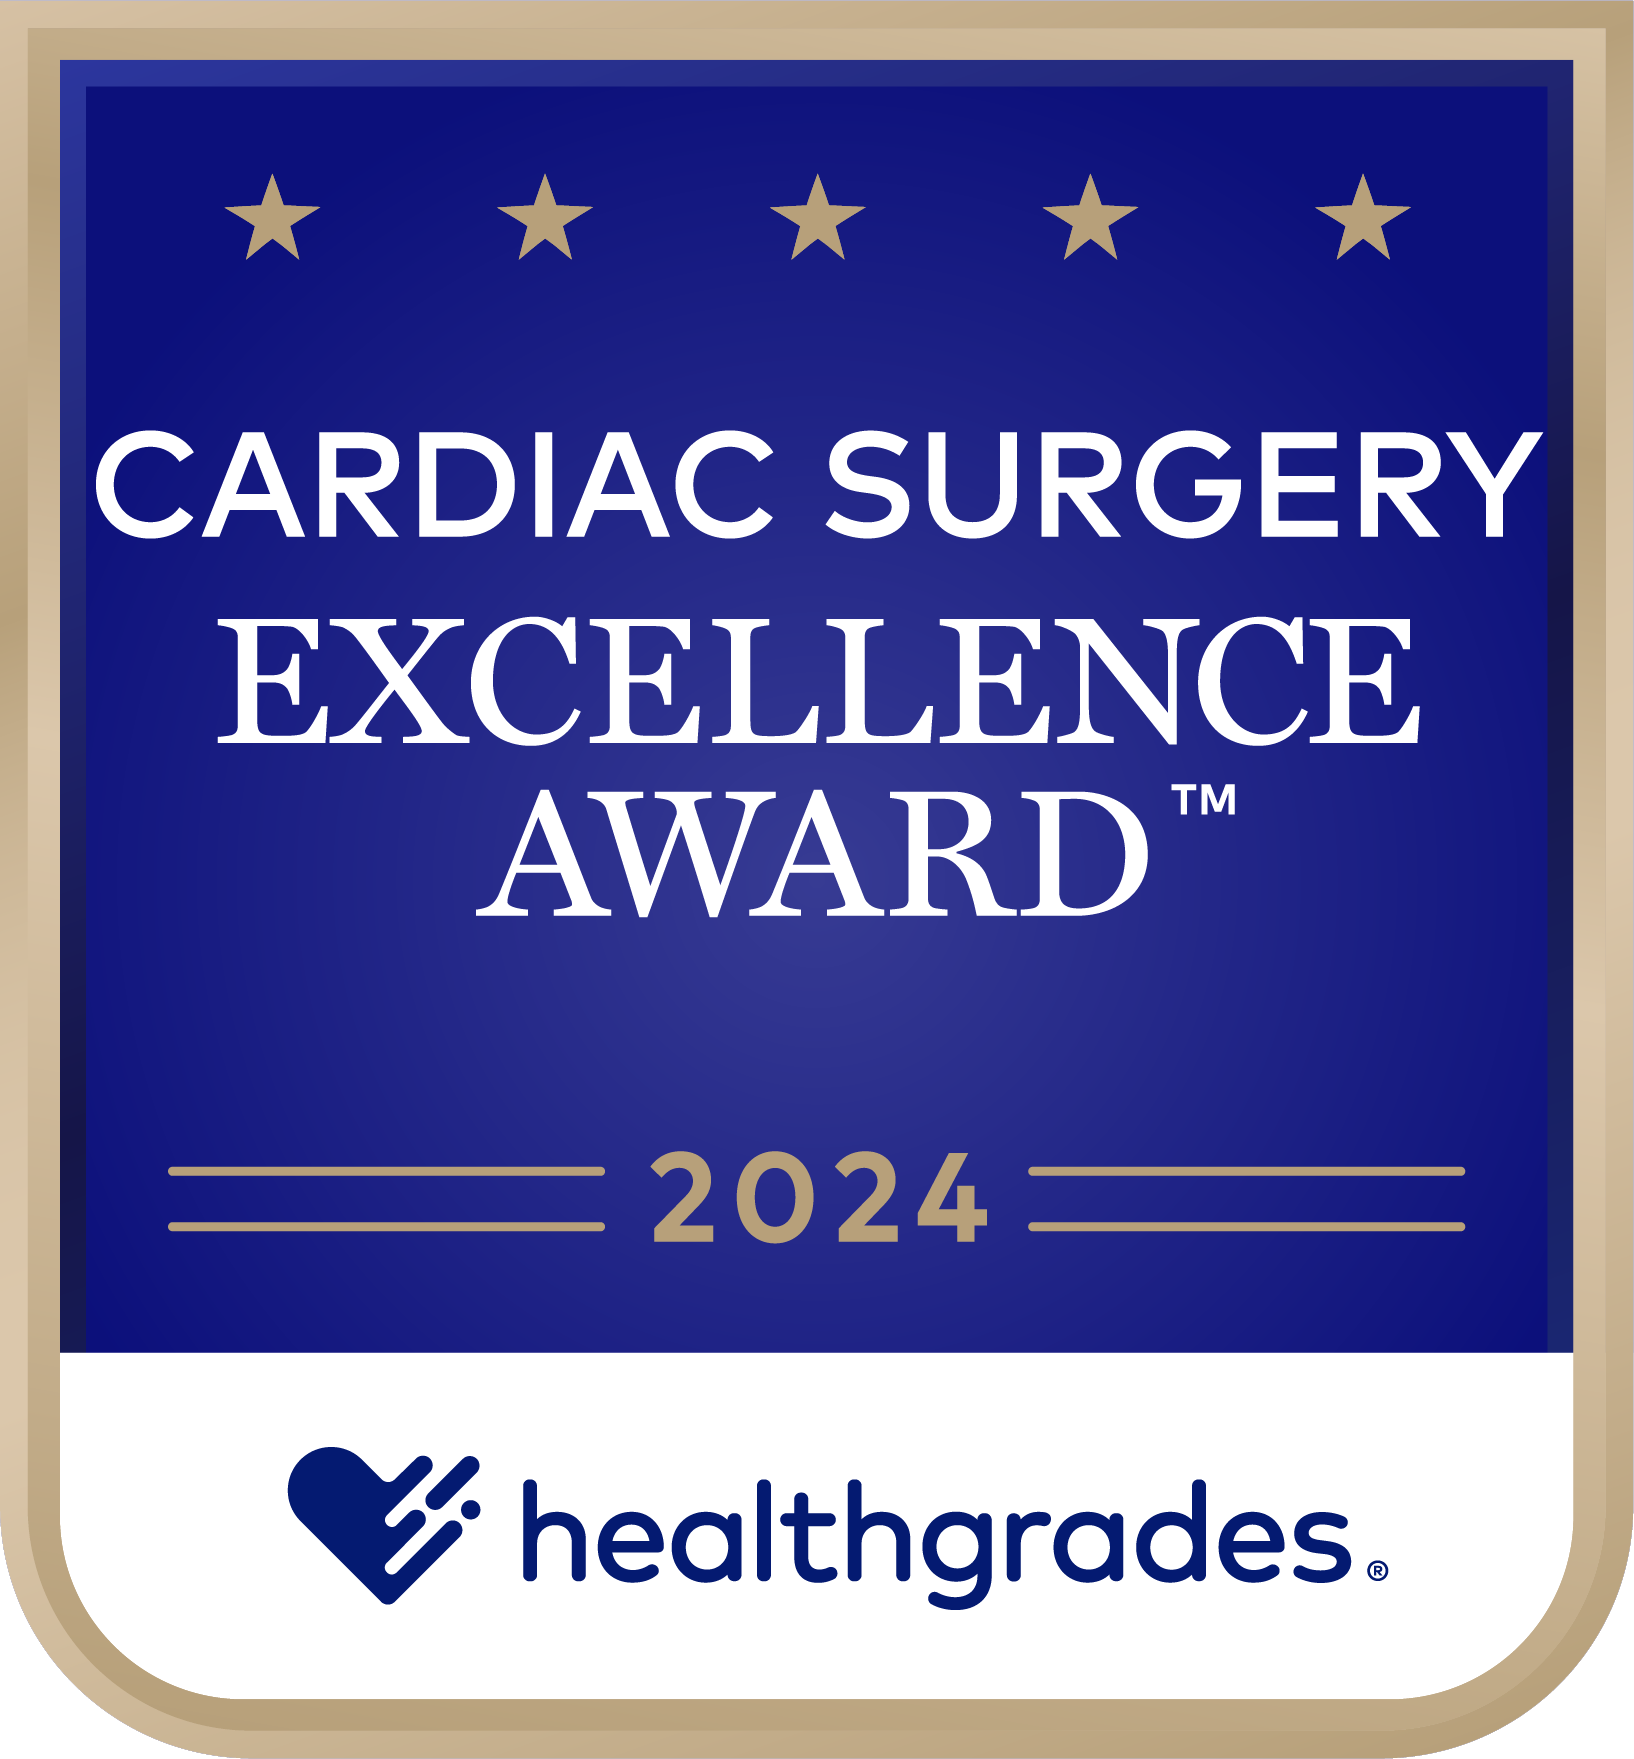 BayCare received the 2024 healthgrades Cardiac Surgery Excellence Award.